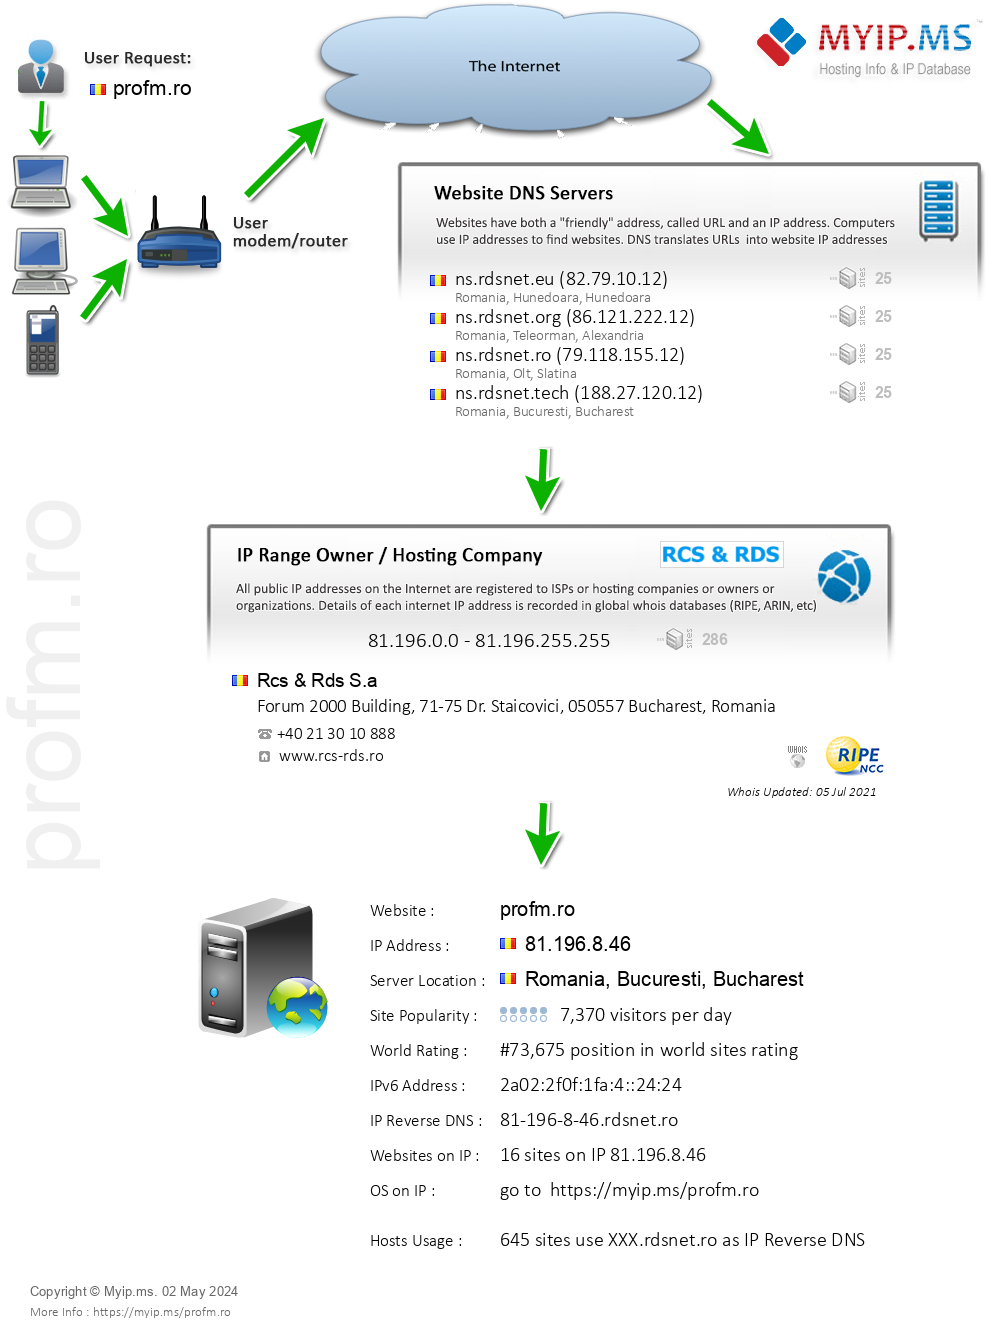 Profm.ro - Website Hosting Visual IP Diagram